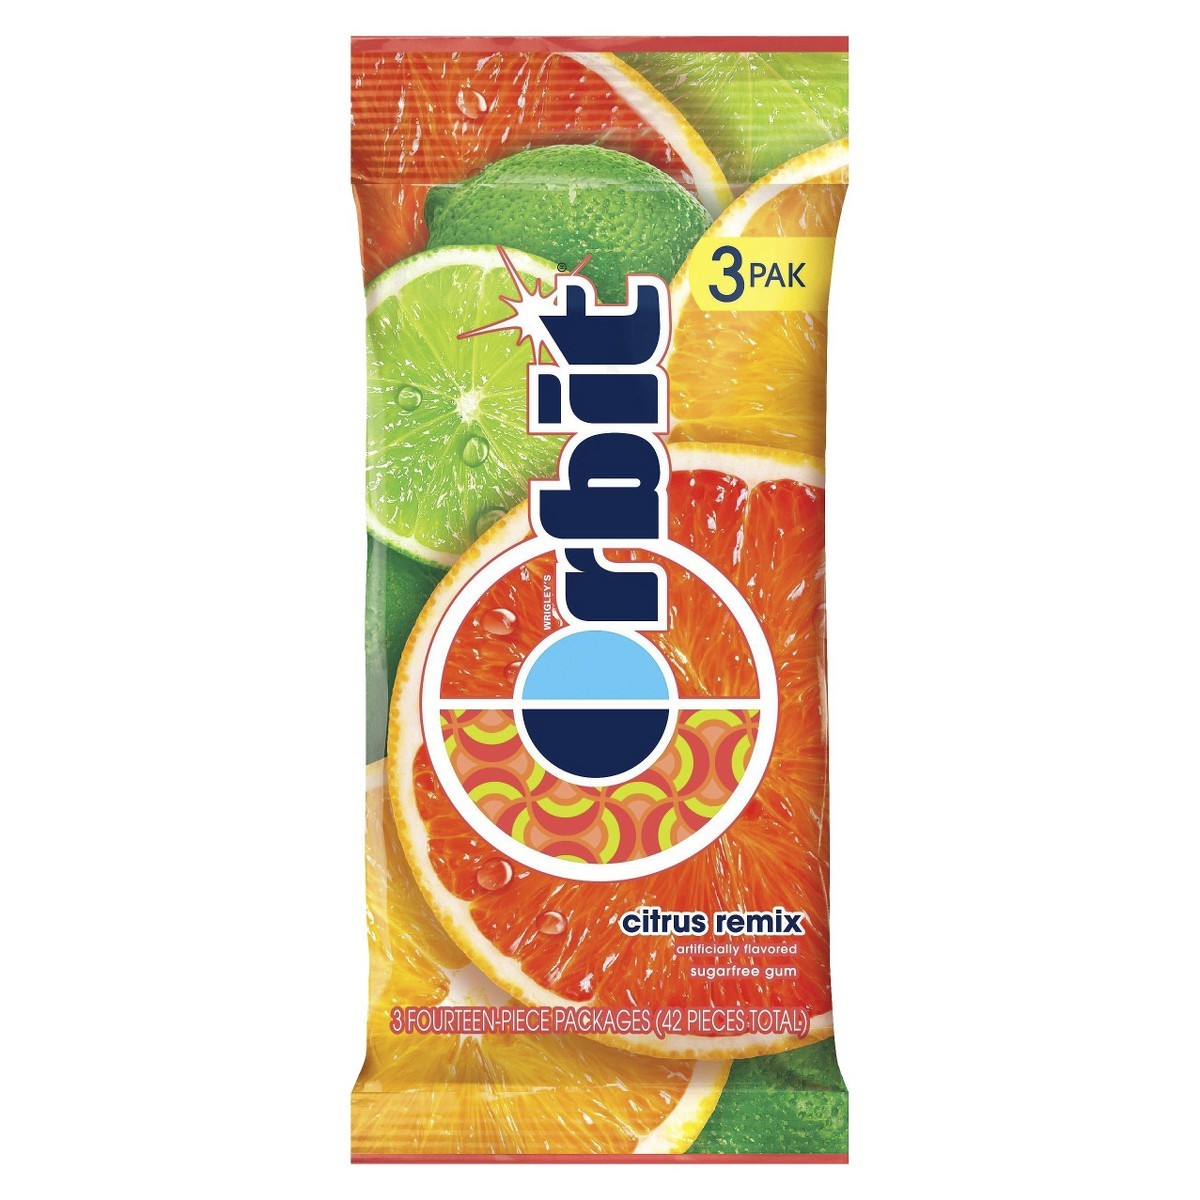 Orbit Citrus Remix Gum 3 pk Only $1.12 at Target